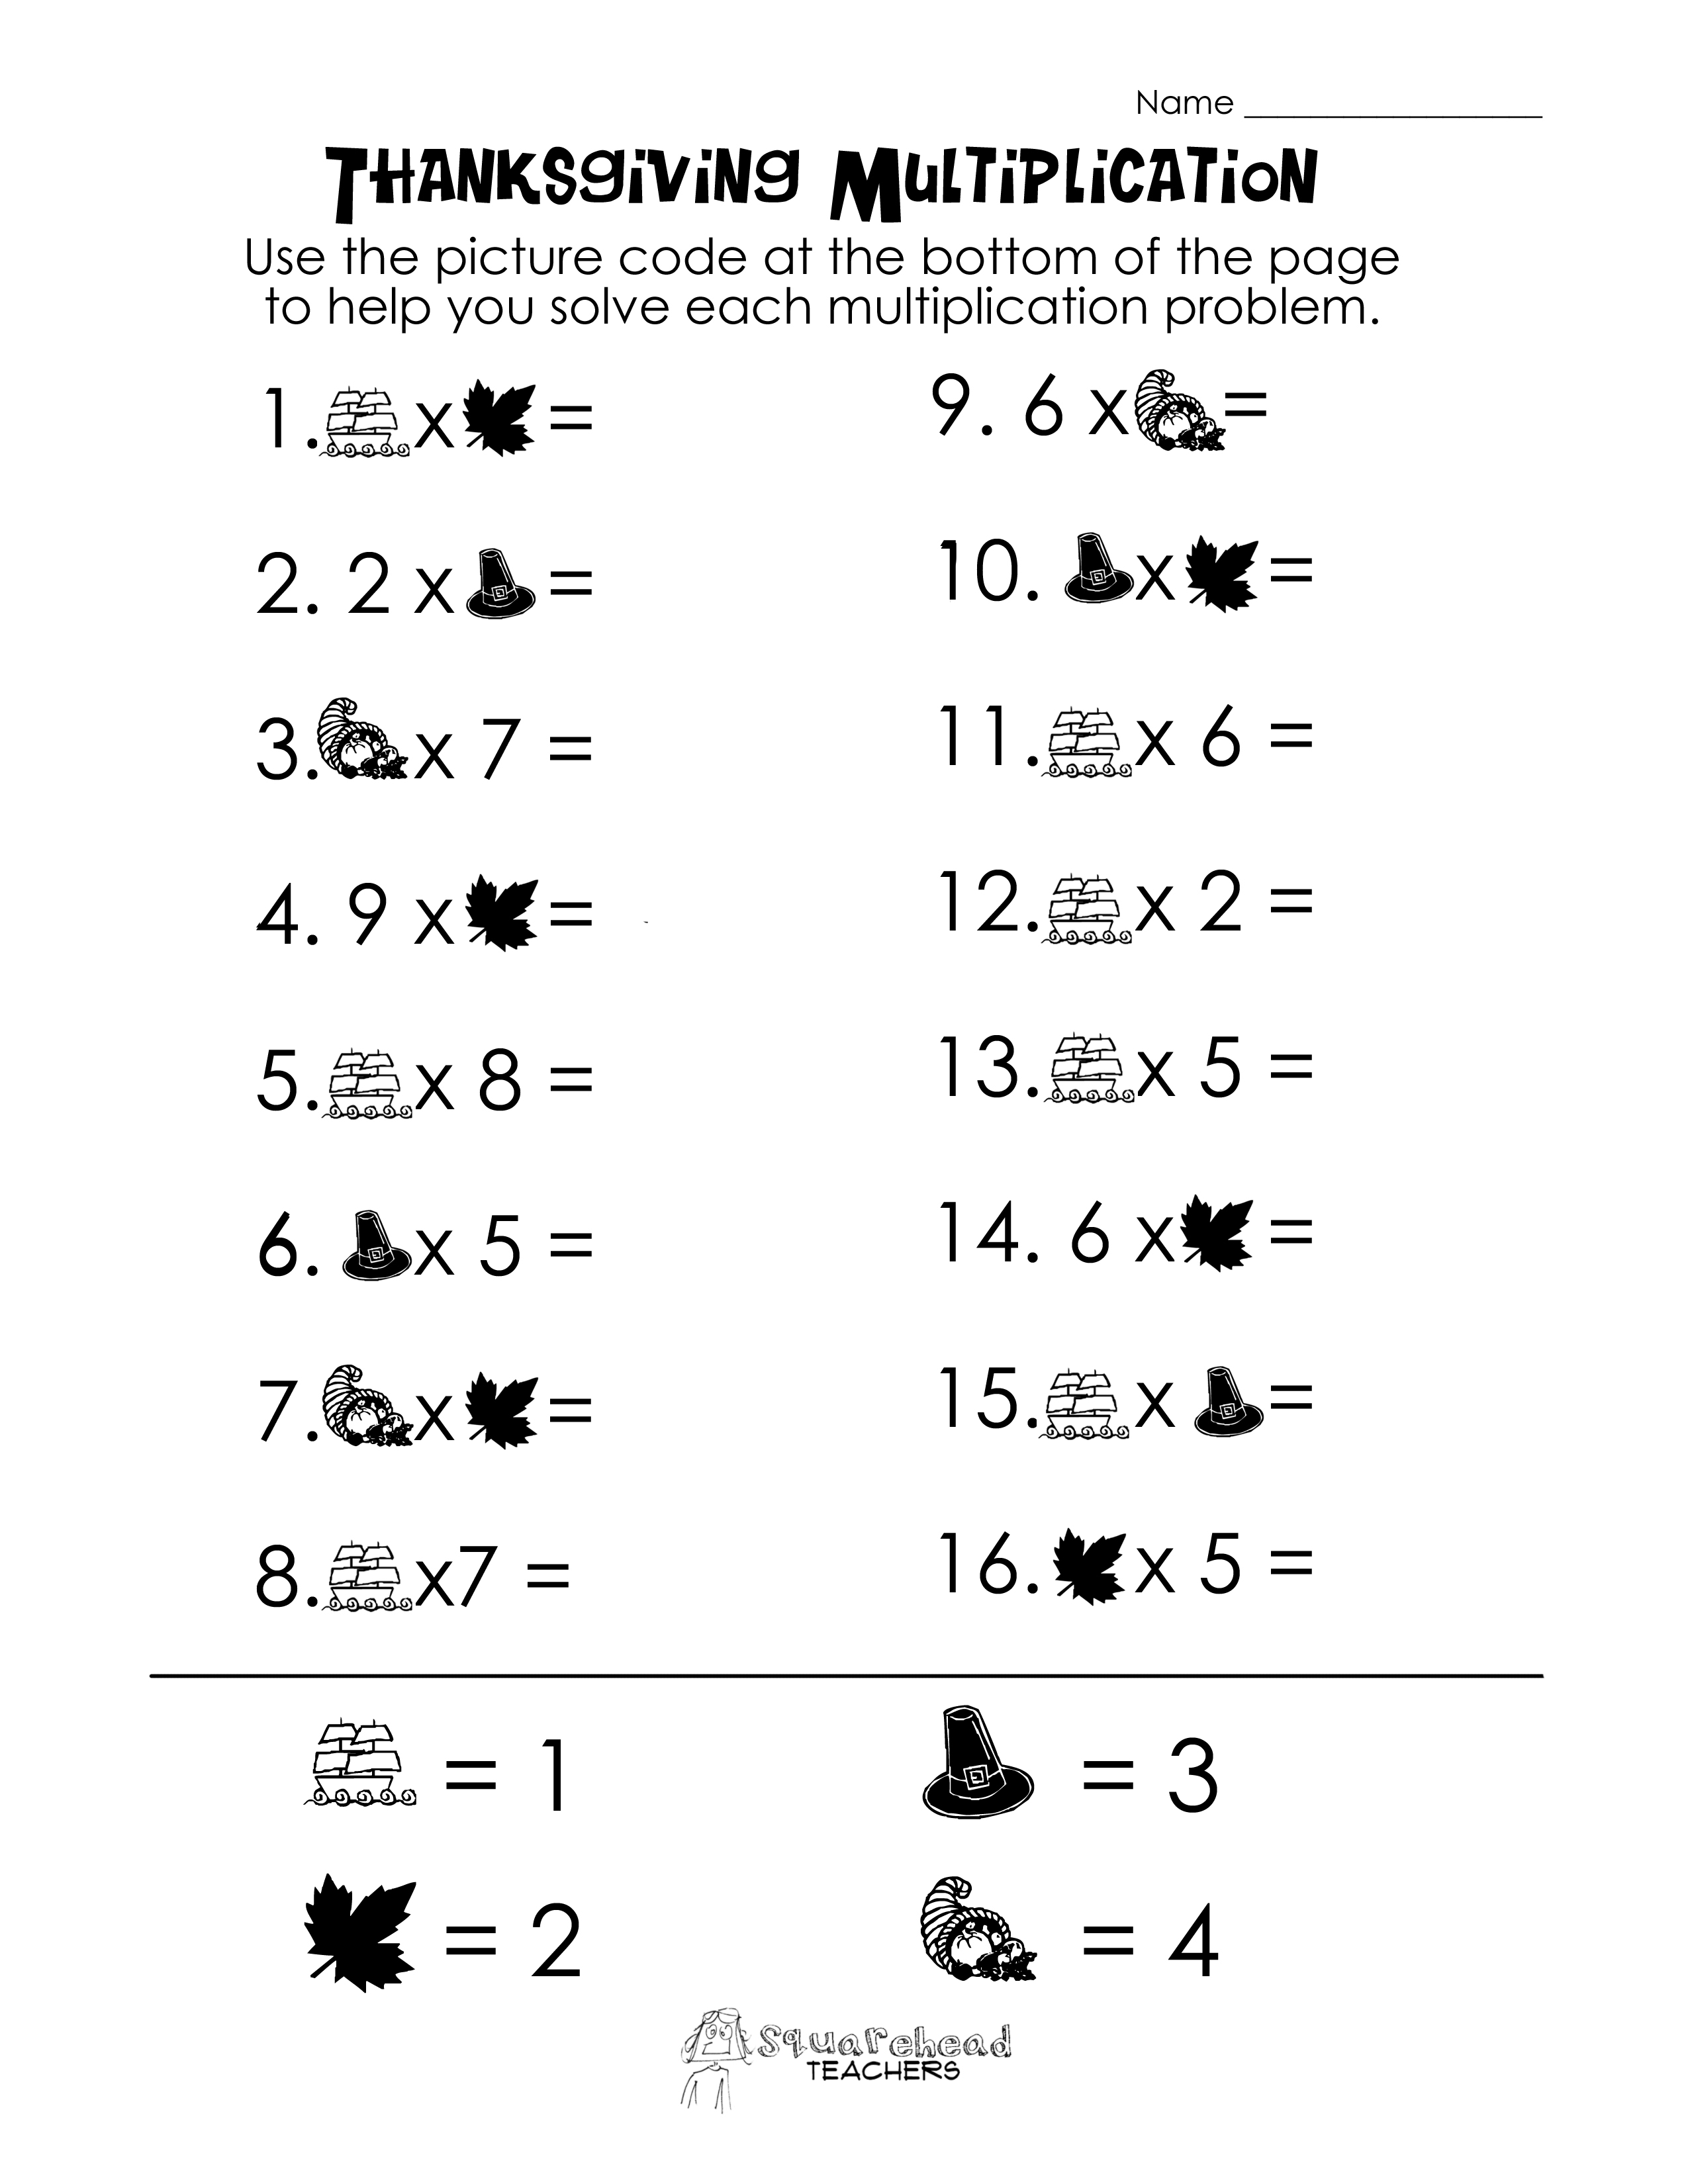 Free Thanksgiving Math Worksheets Multiplication Image